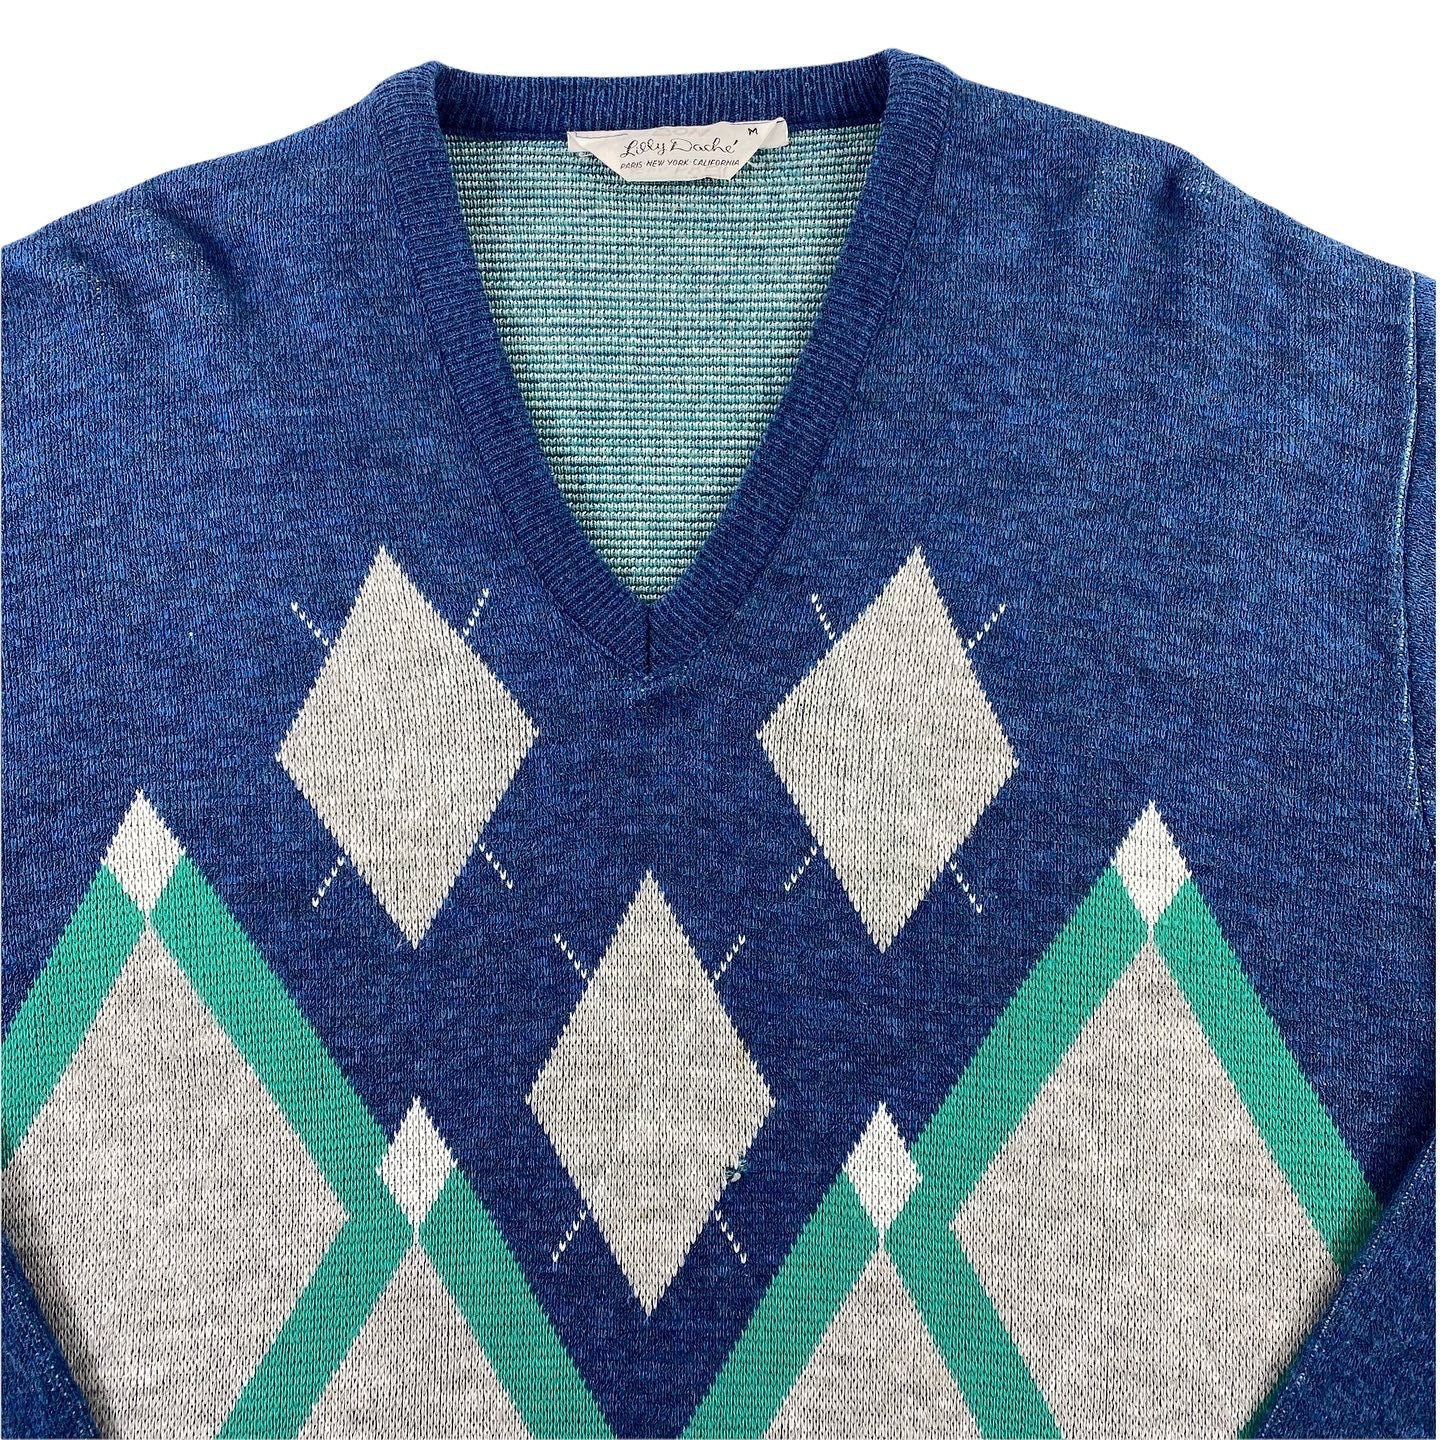 70s Face sweater. medium